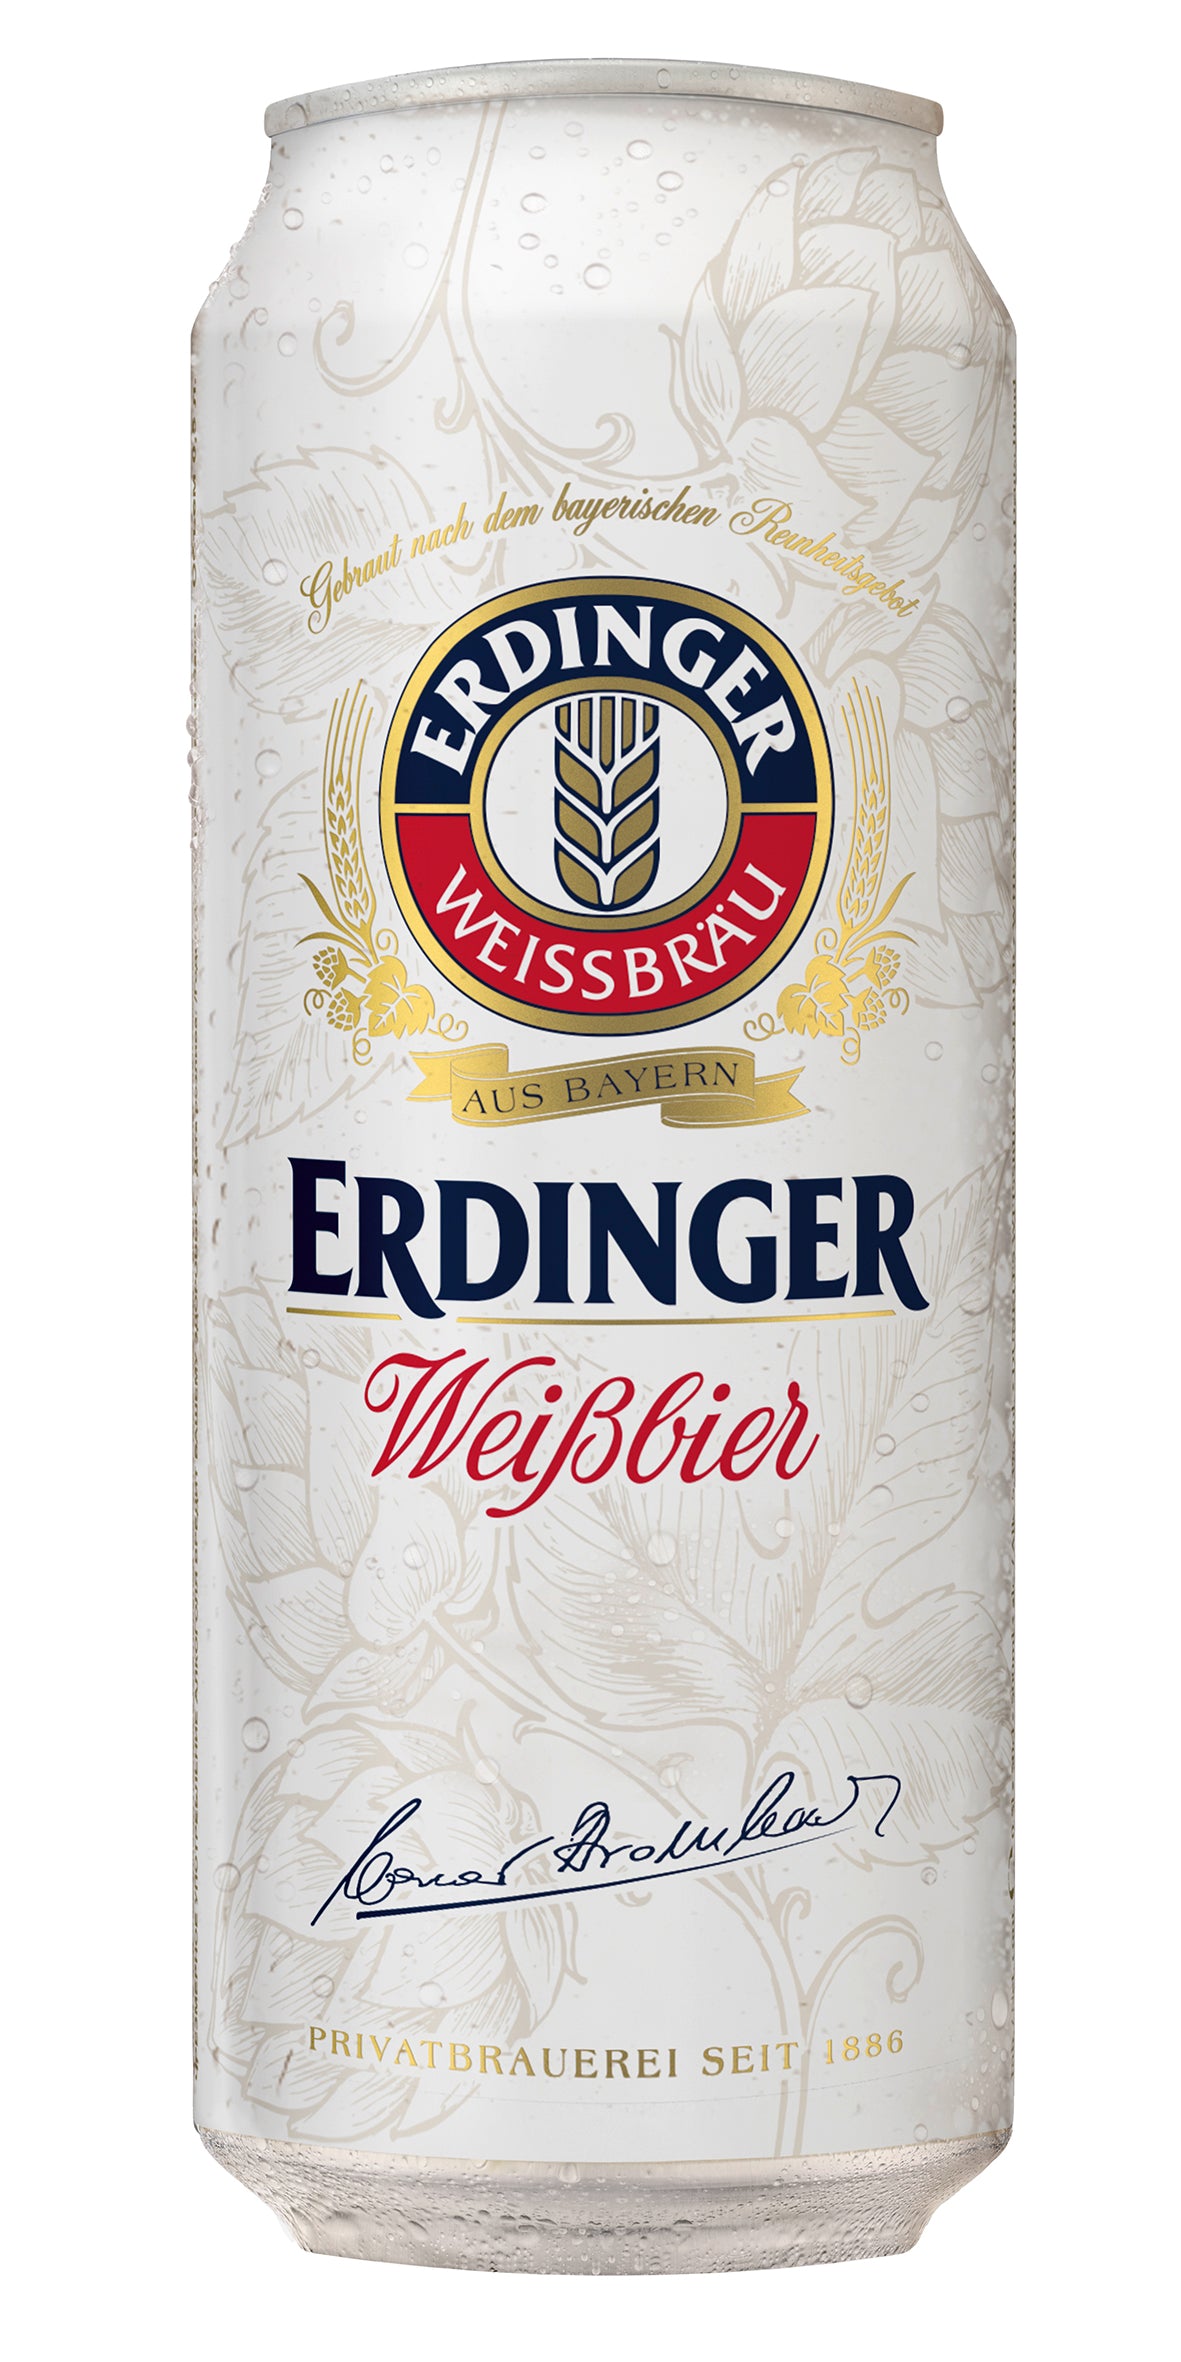 Bere Erdinger Brauhaus Helles, 5.3%, 0.5L, 6 doze